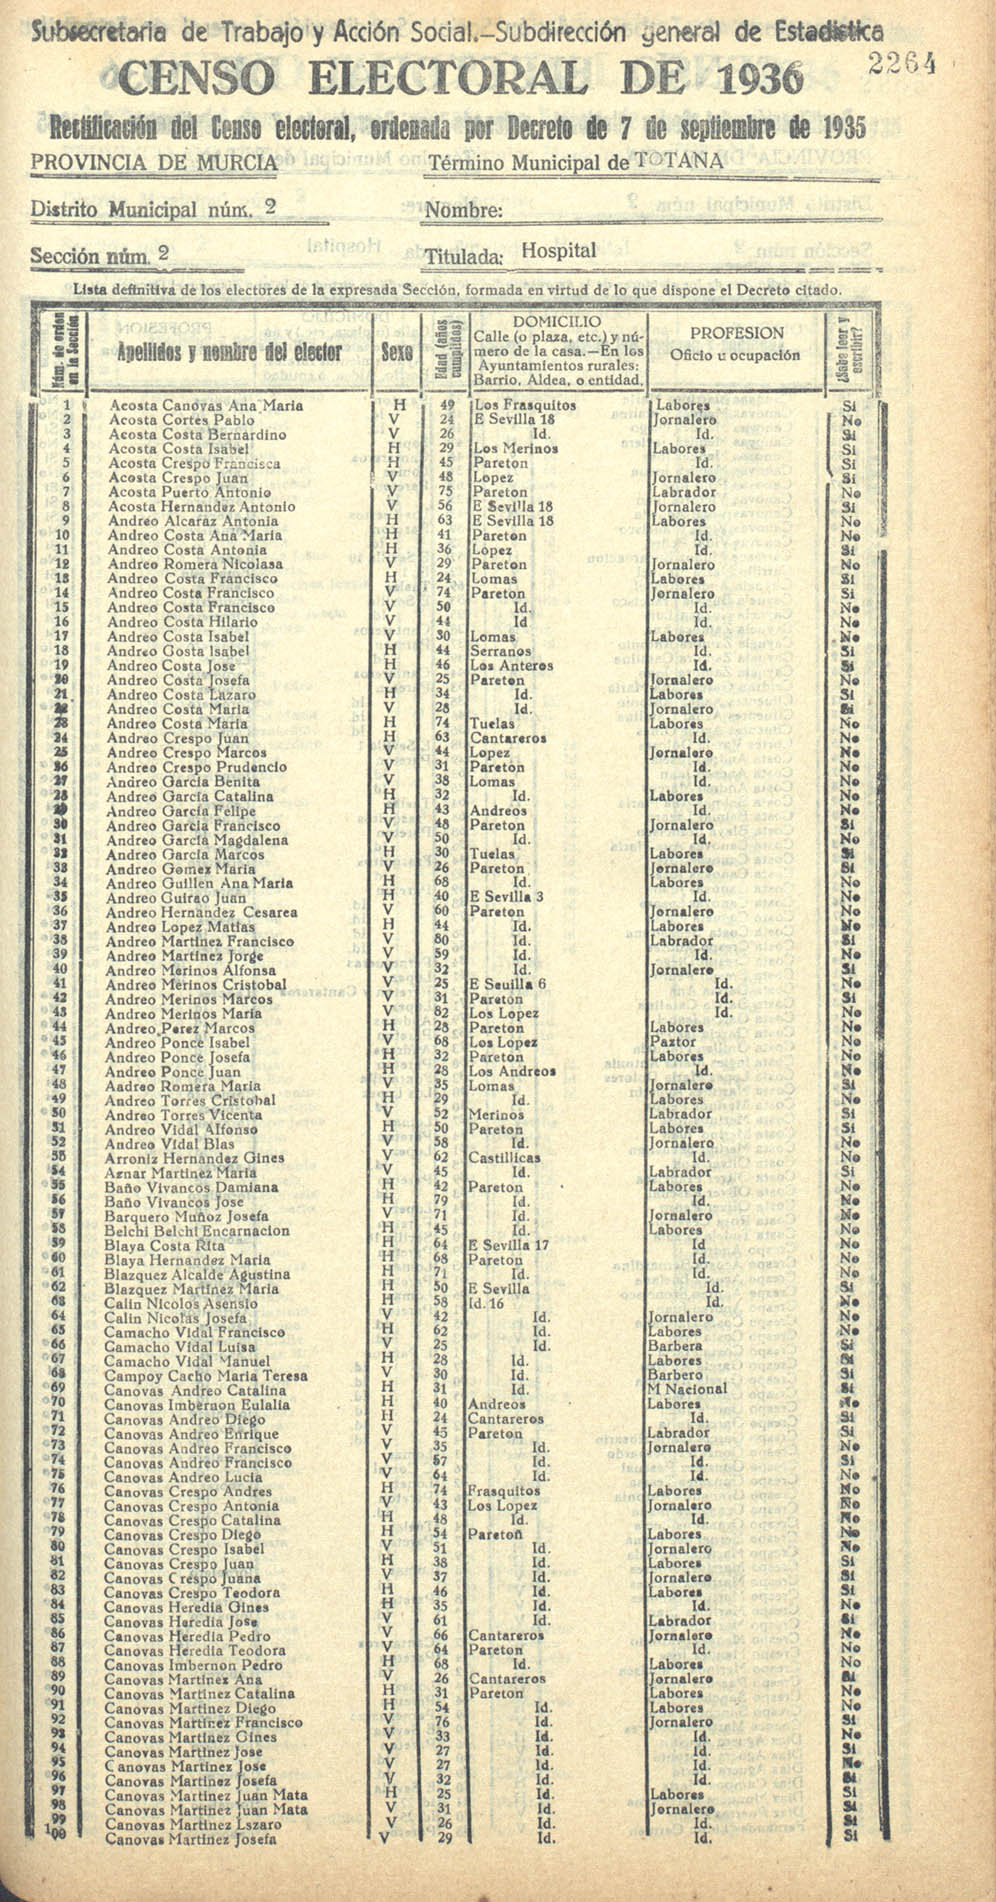 Censo electoral provincial de 1936. Totana. Distrito 2ª. Sección 2ª, Hospital